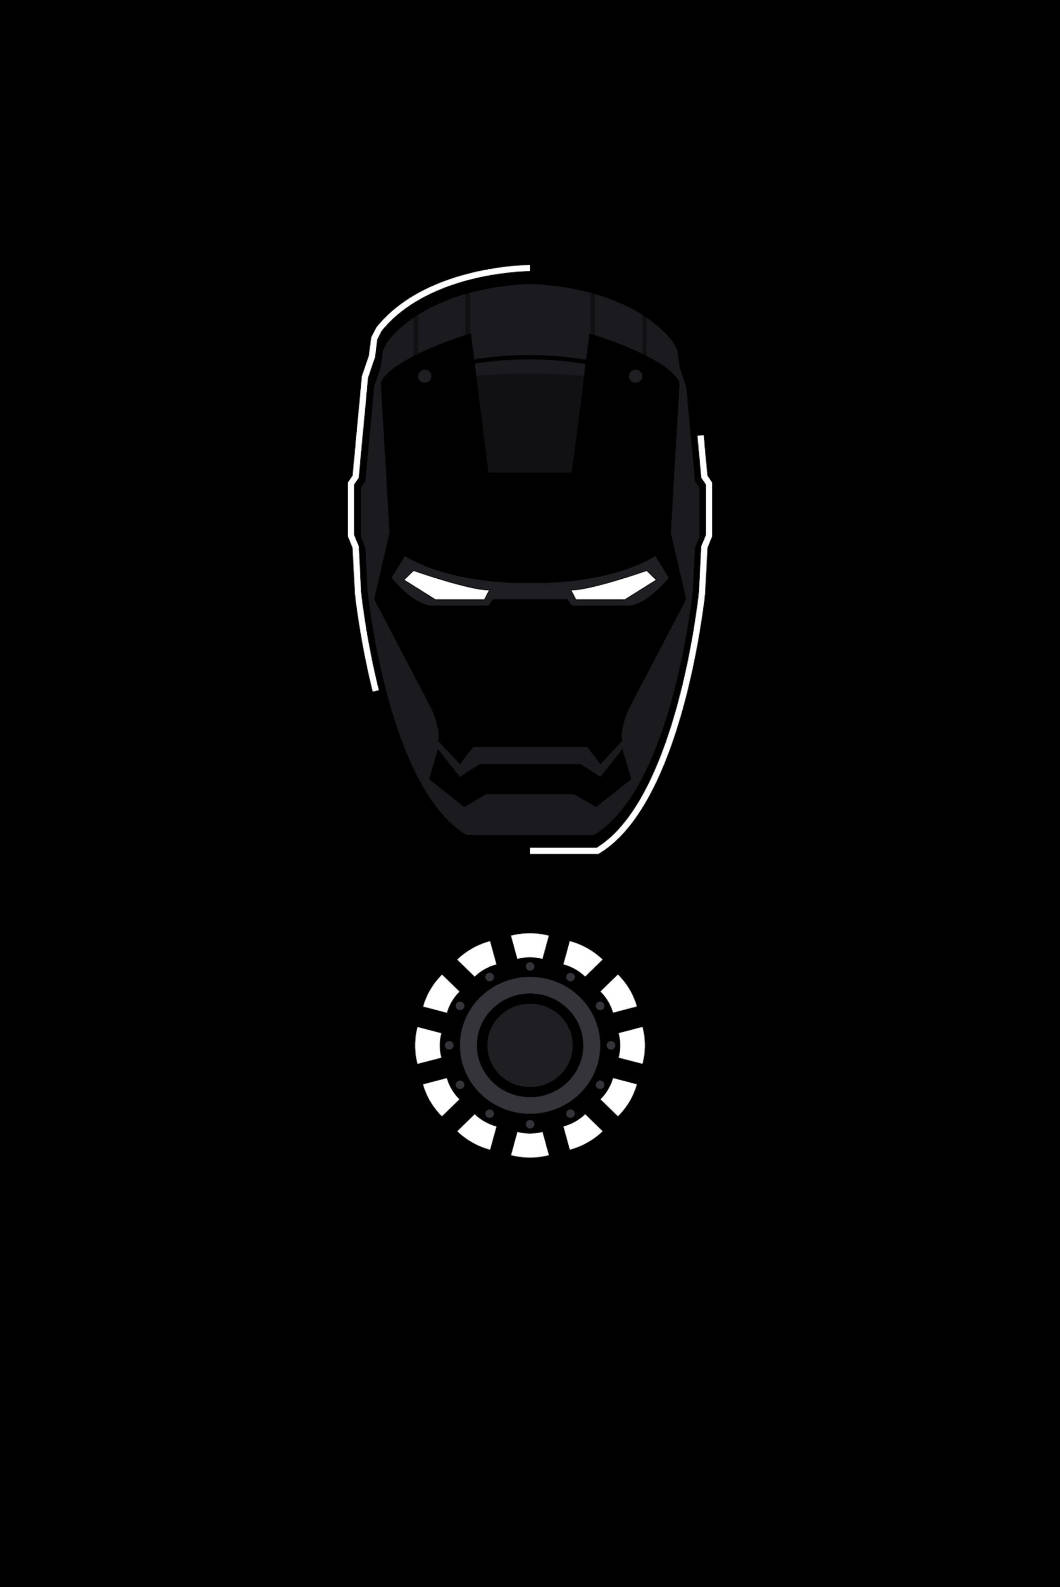 Glowing Iron Man iPhone 4s Wallpaper